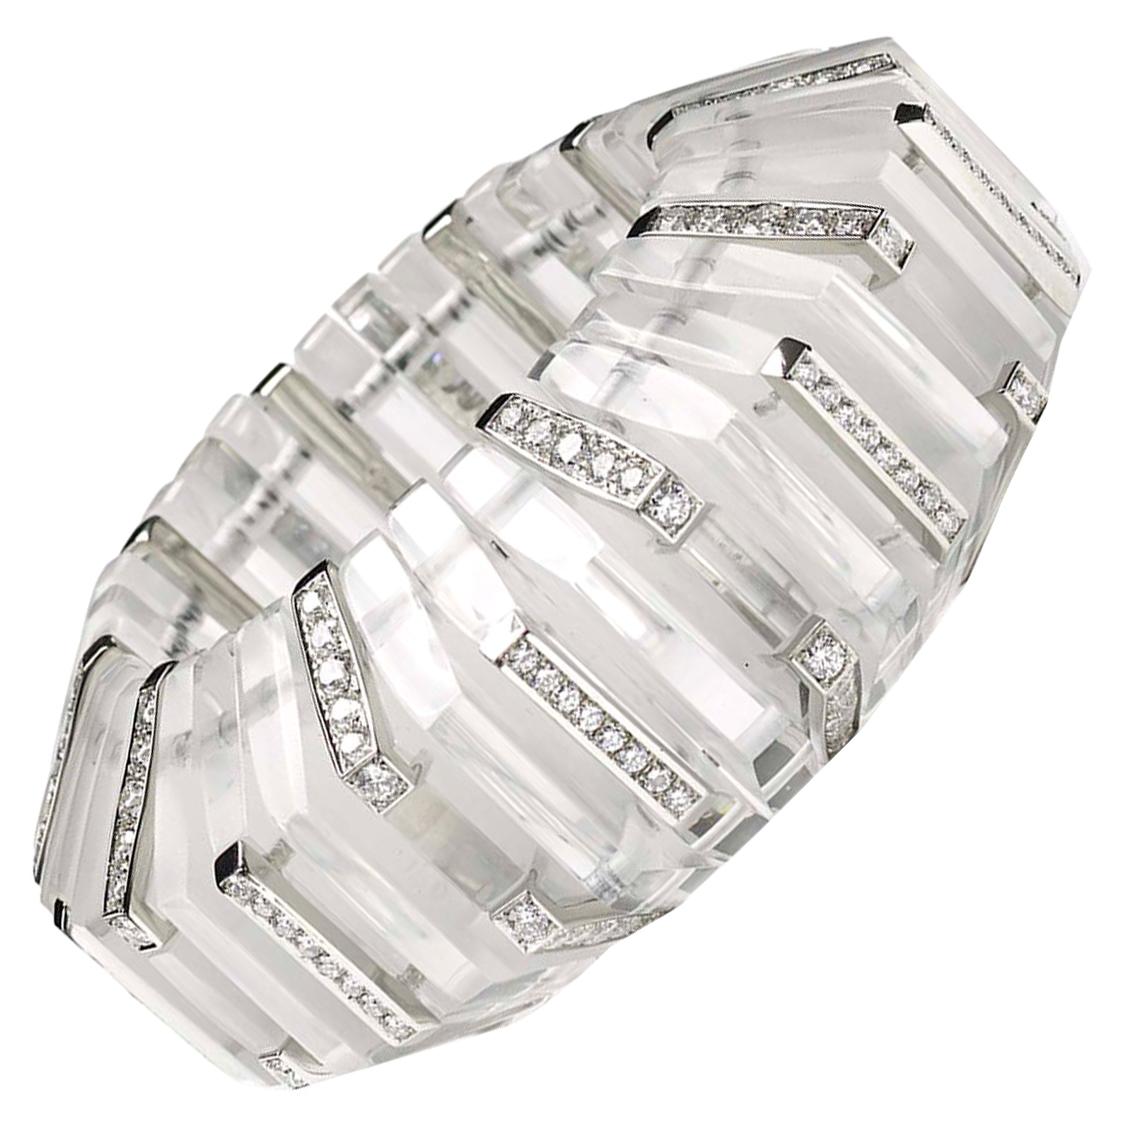 Rock Crystal, Diamond and Platinum Cuff Bracelet